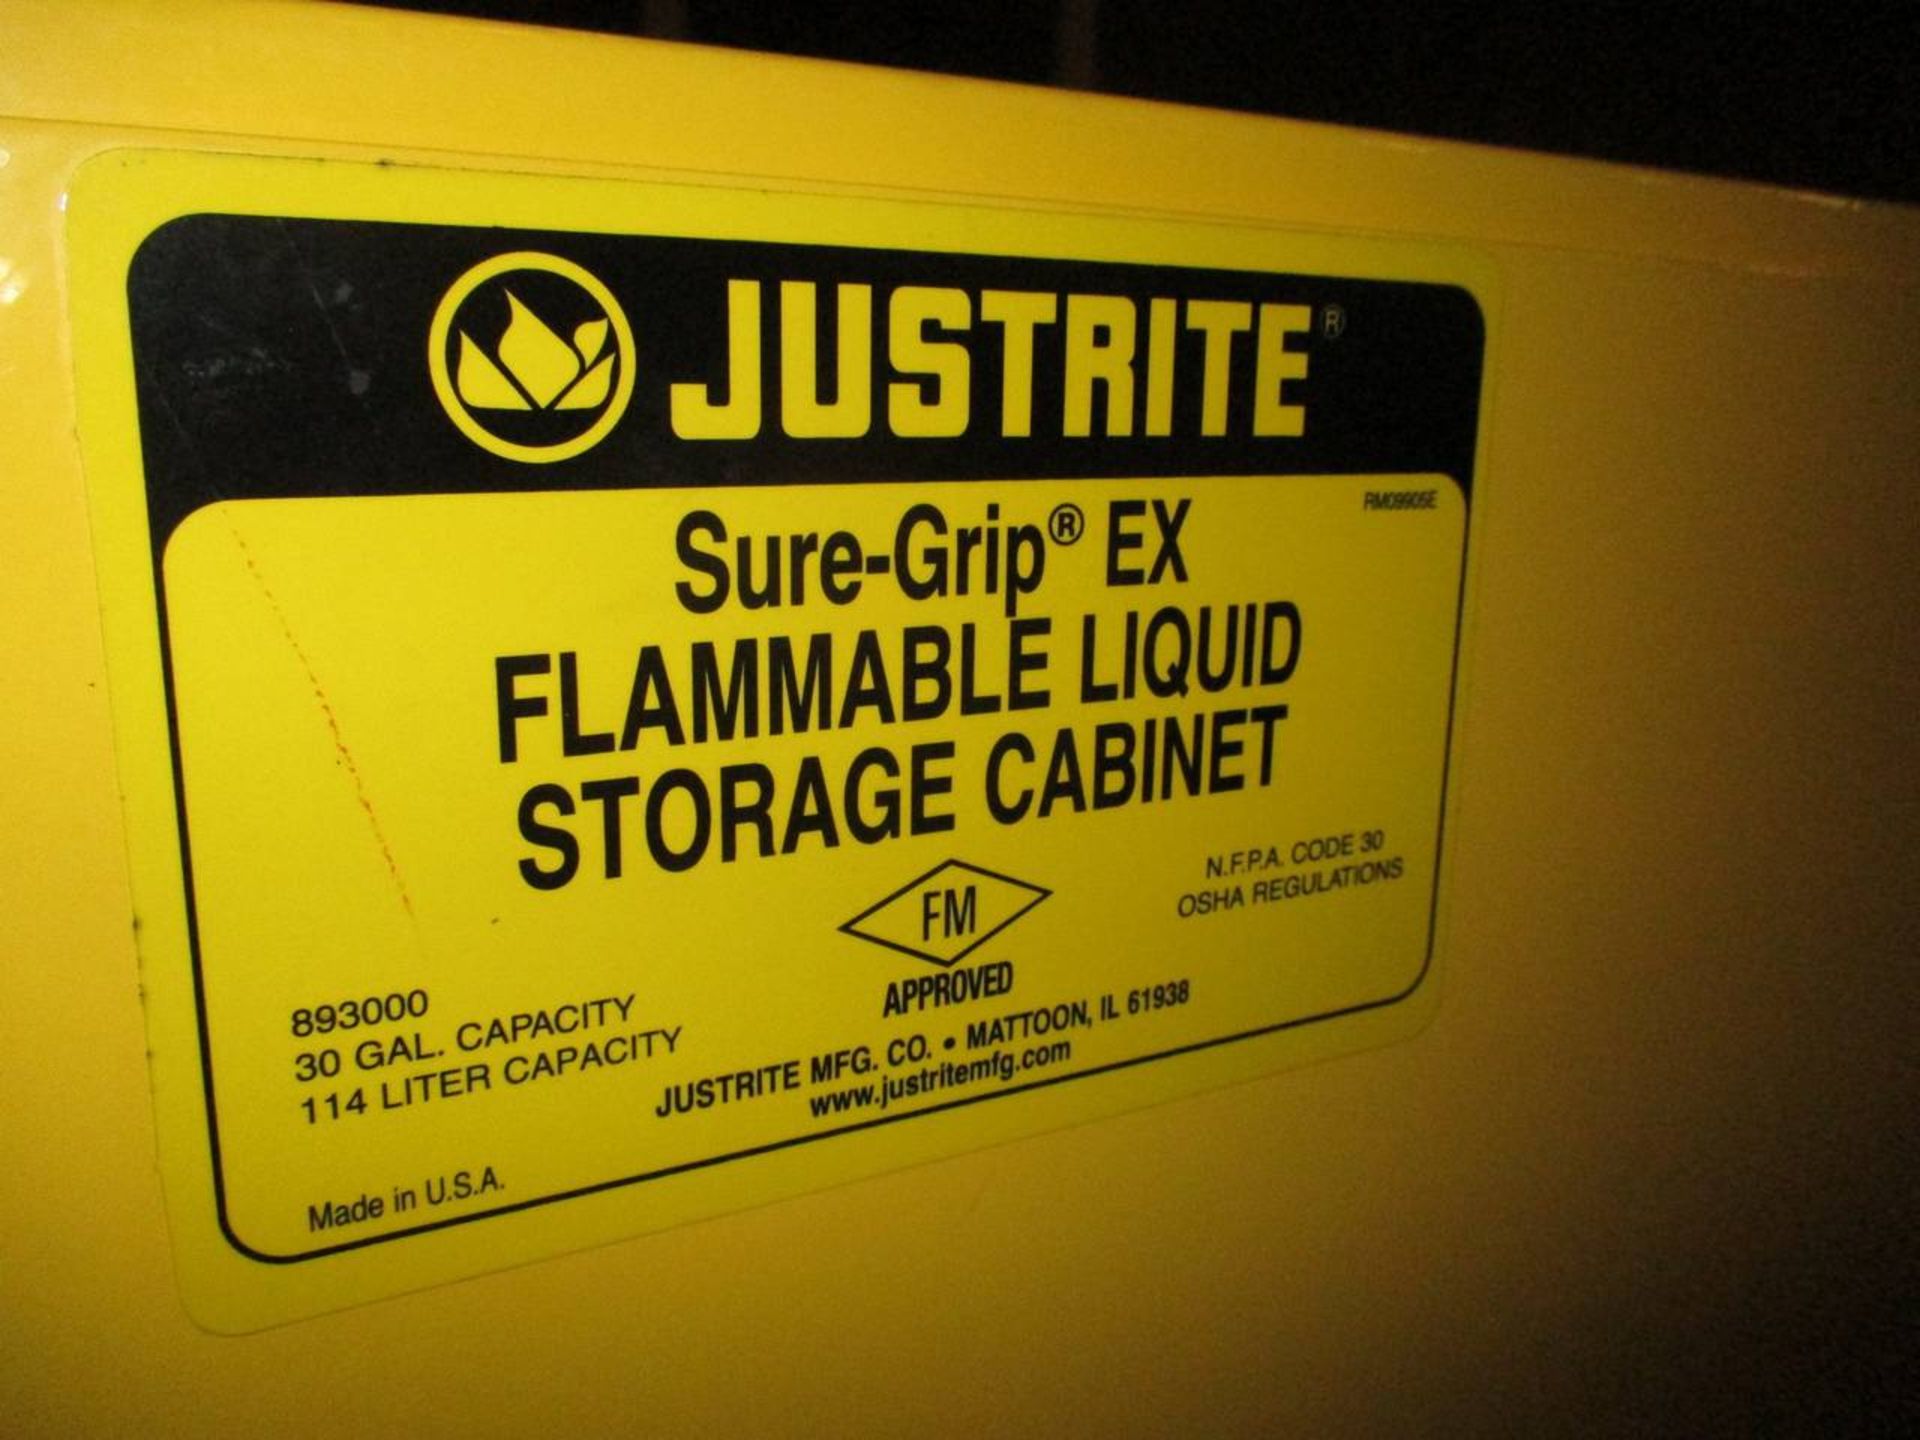 Just Rite Sure-Grip EX 30 Gallon Flammable Liquid Storage Cabinet - Image 5 of 7